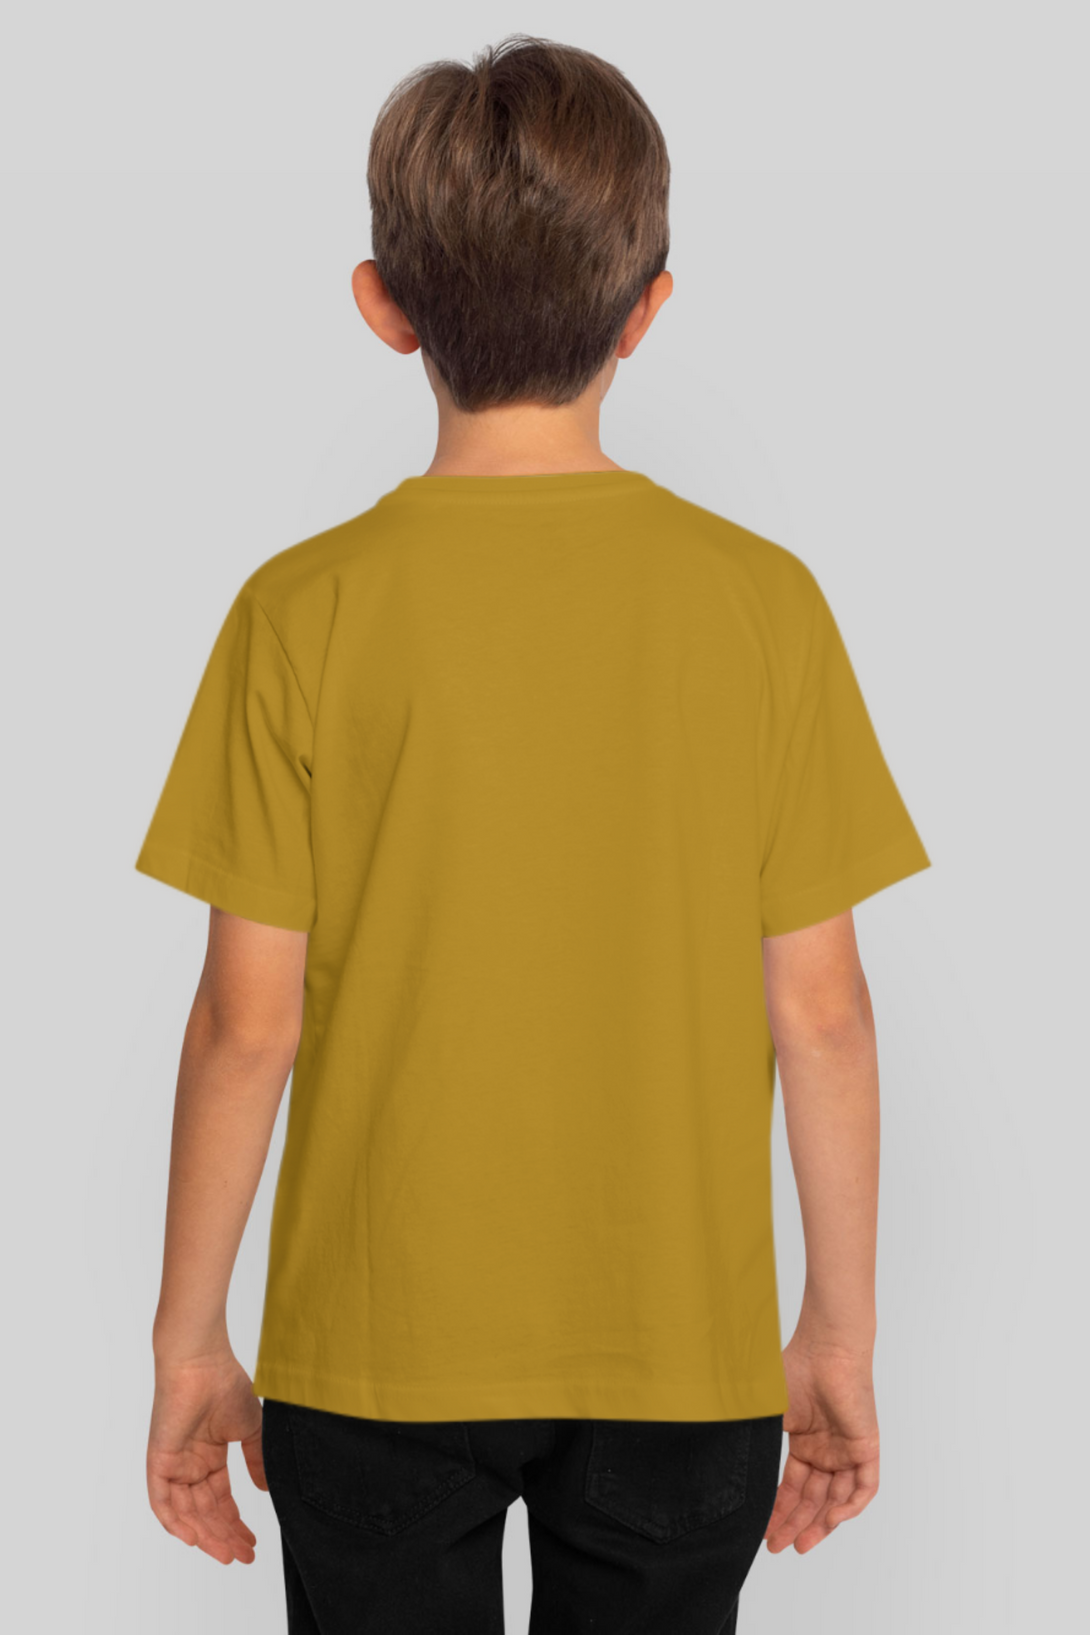 Mustard Yellow T-Shirt For Boy - WowWaves - 2